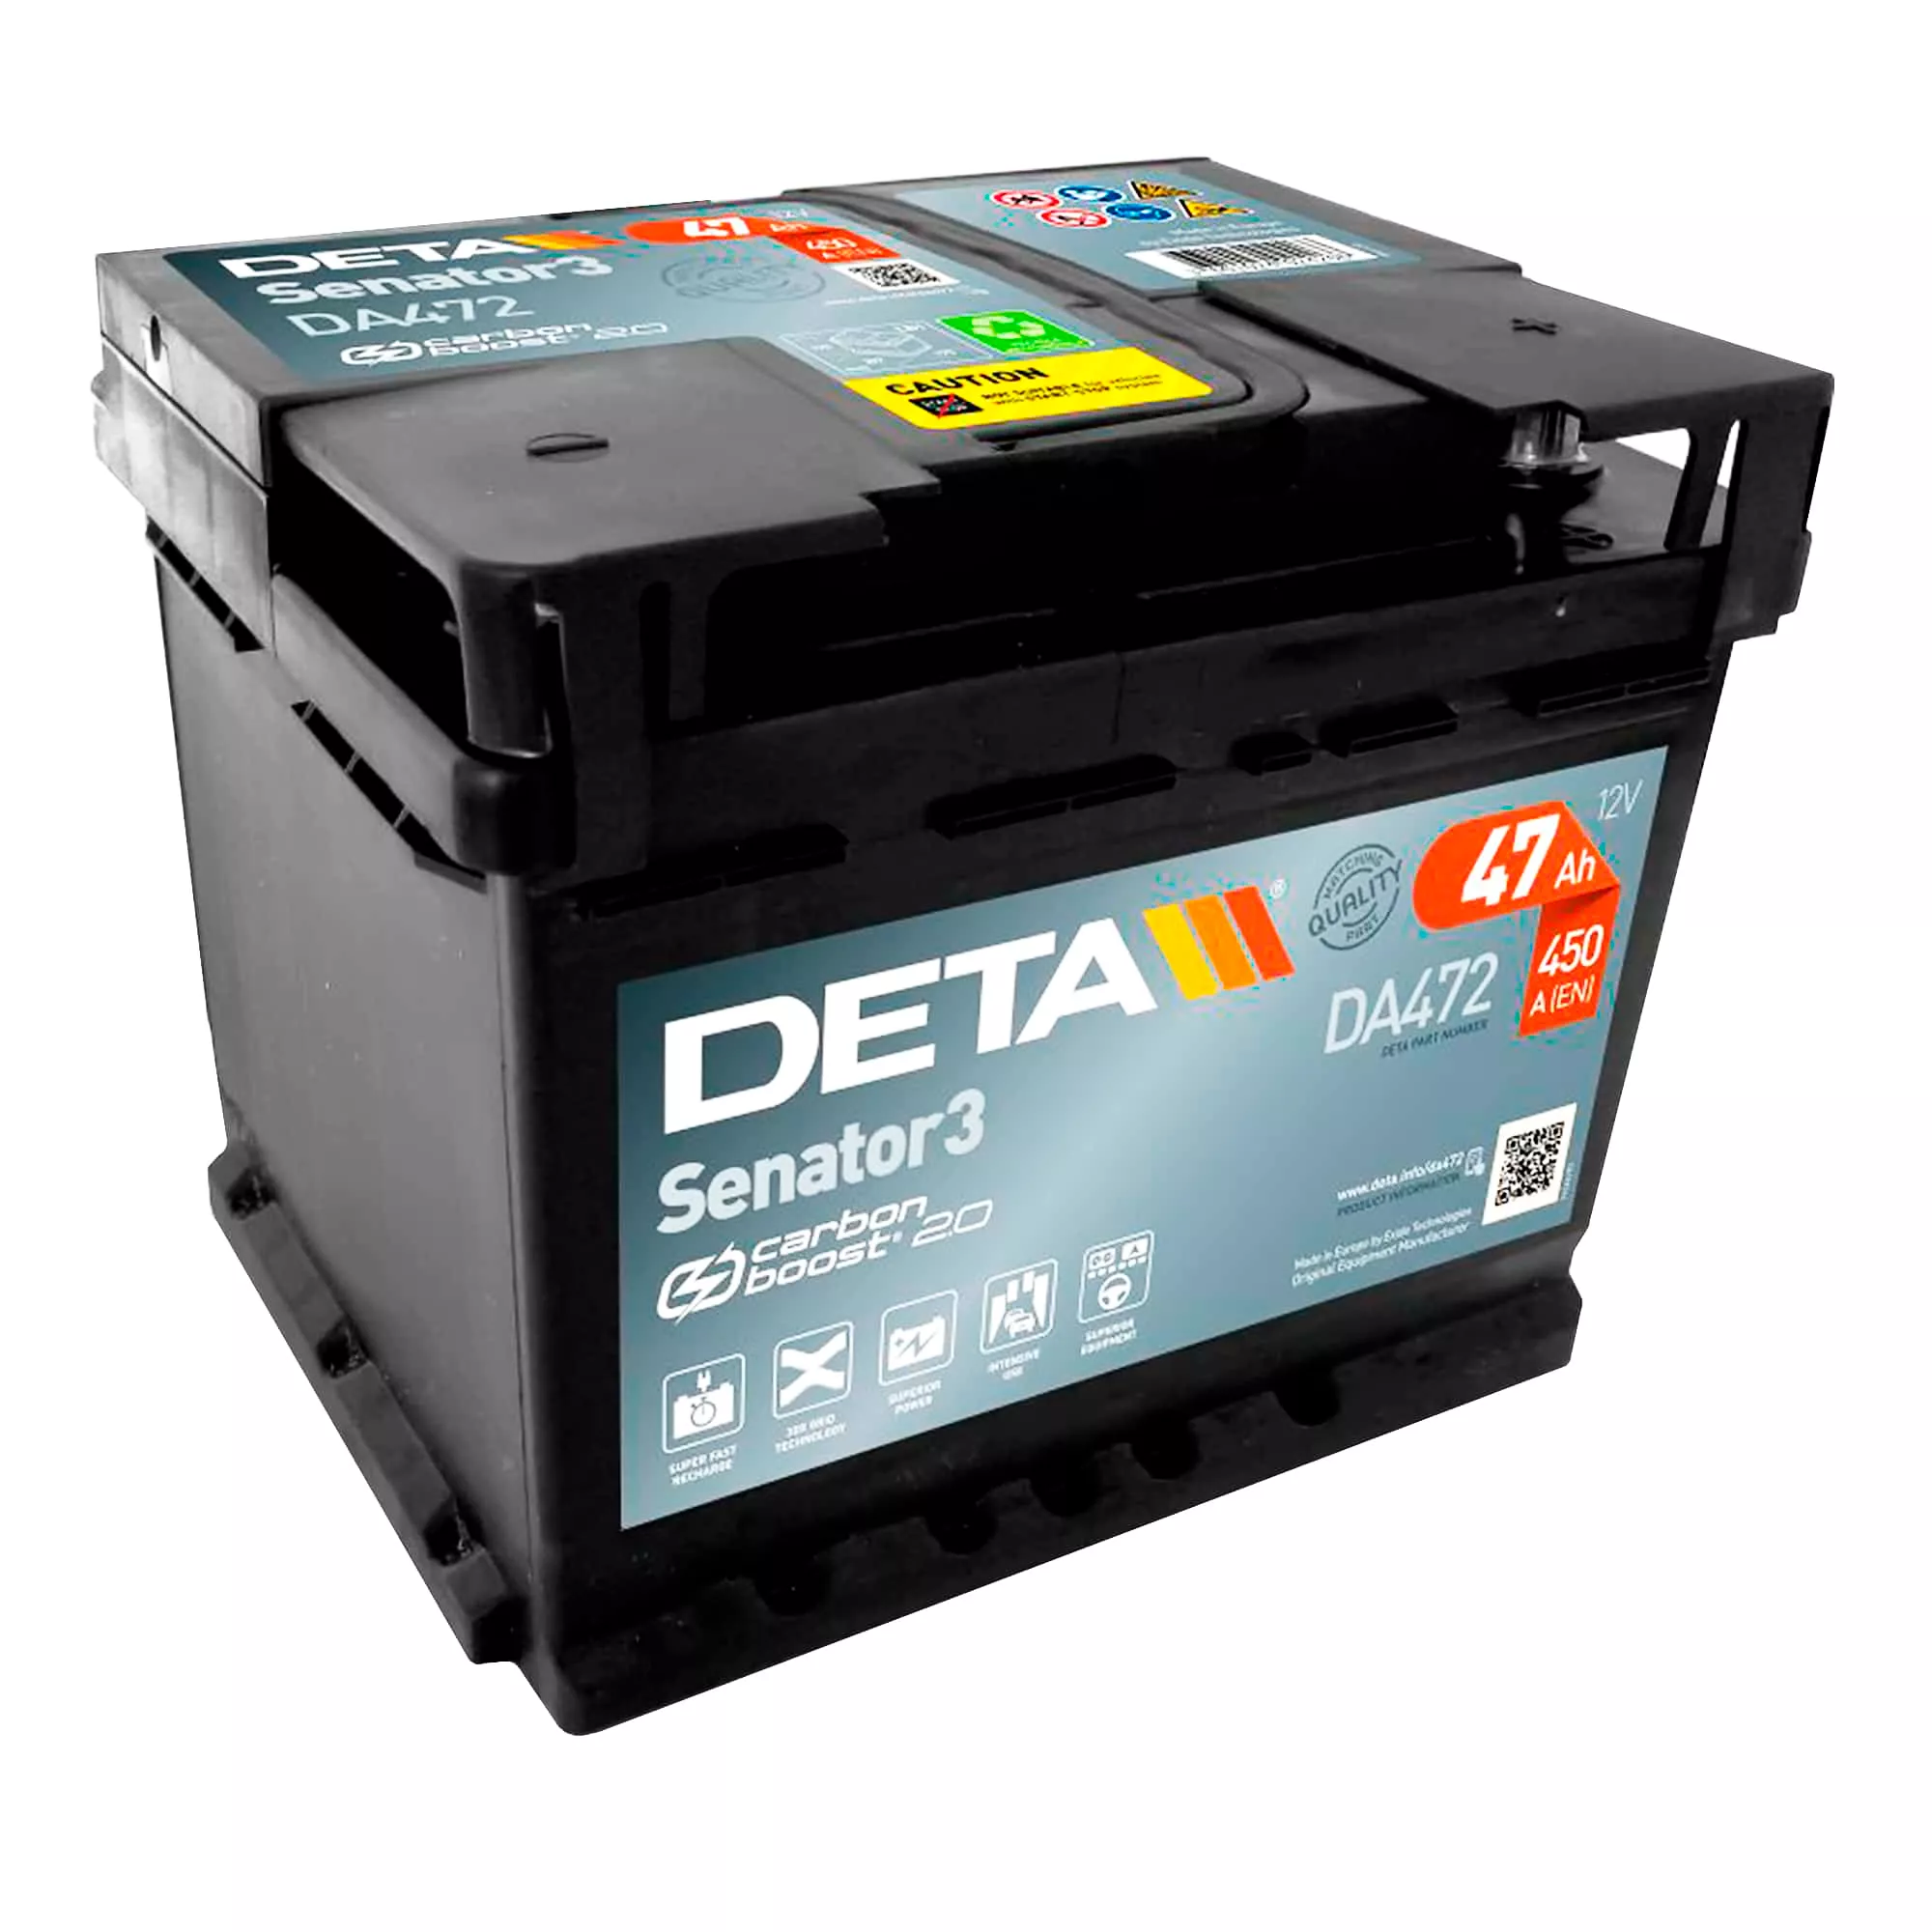 Автомобільний акумулятор DETA 6CT-47Аh АзЕ Senator 3 (DA472)